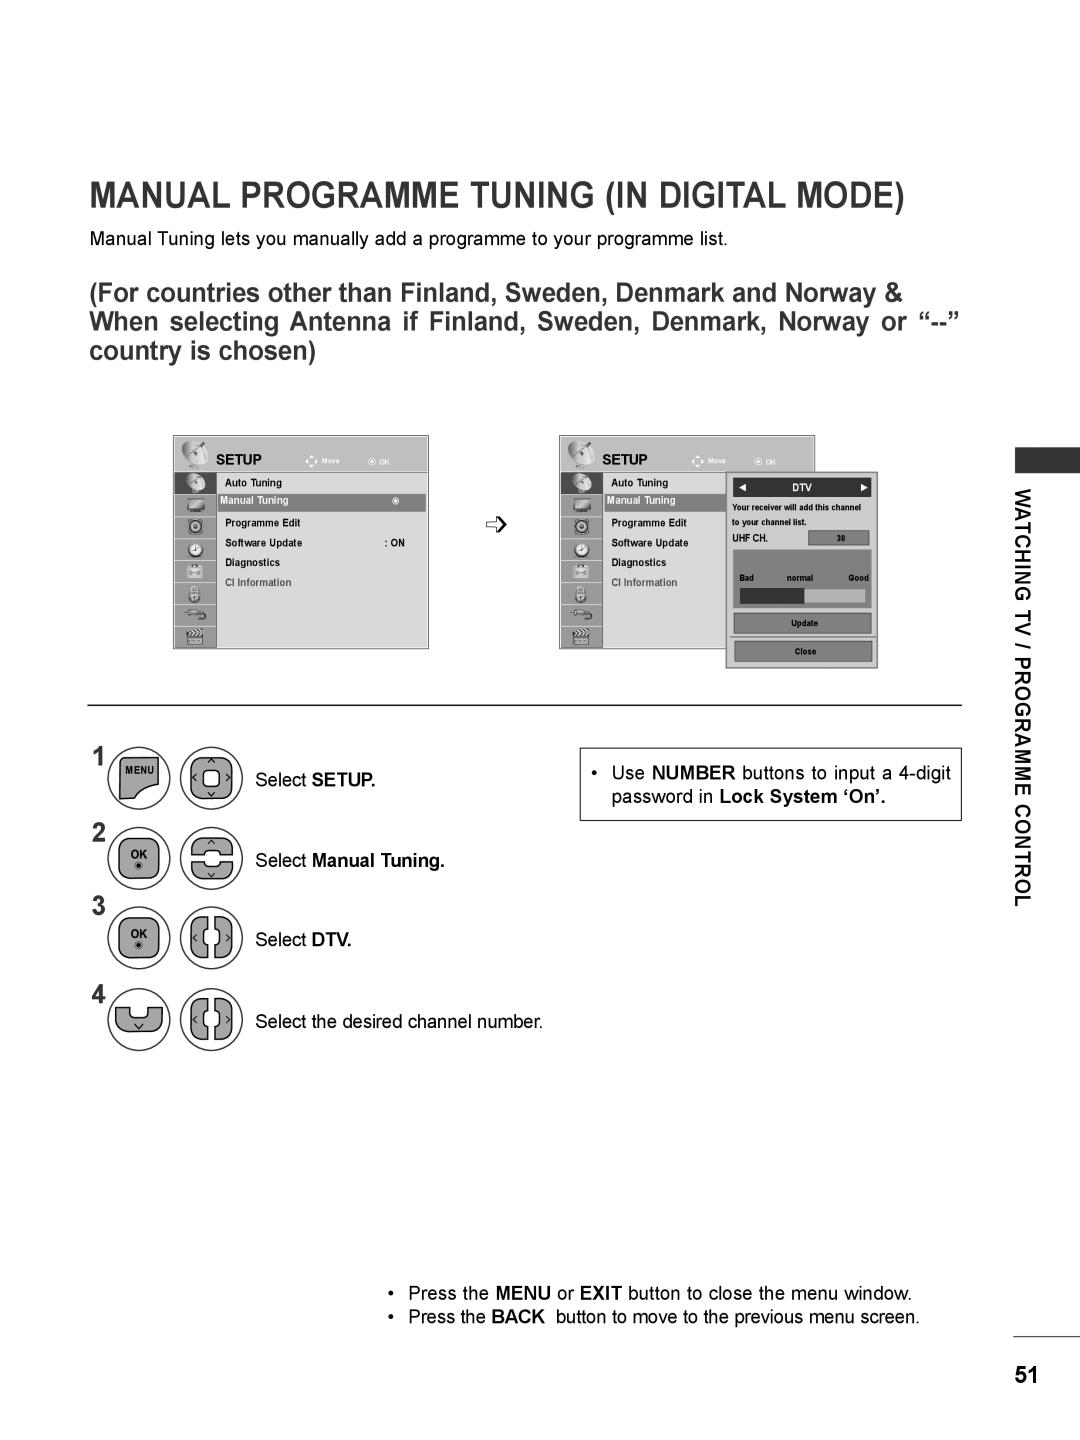 LG Electronics M2280DN Manual Programme Tuning In Digital Mode, Select Manual Tuning, Control, Watching Tv / Programme 